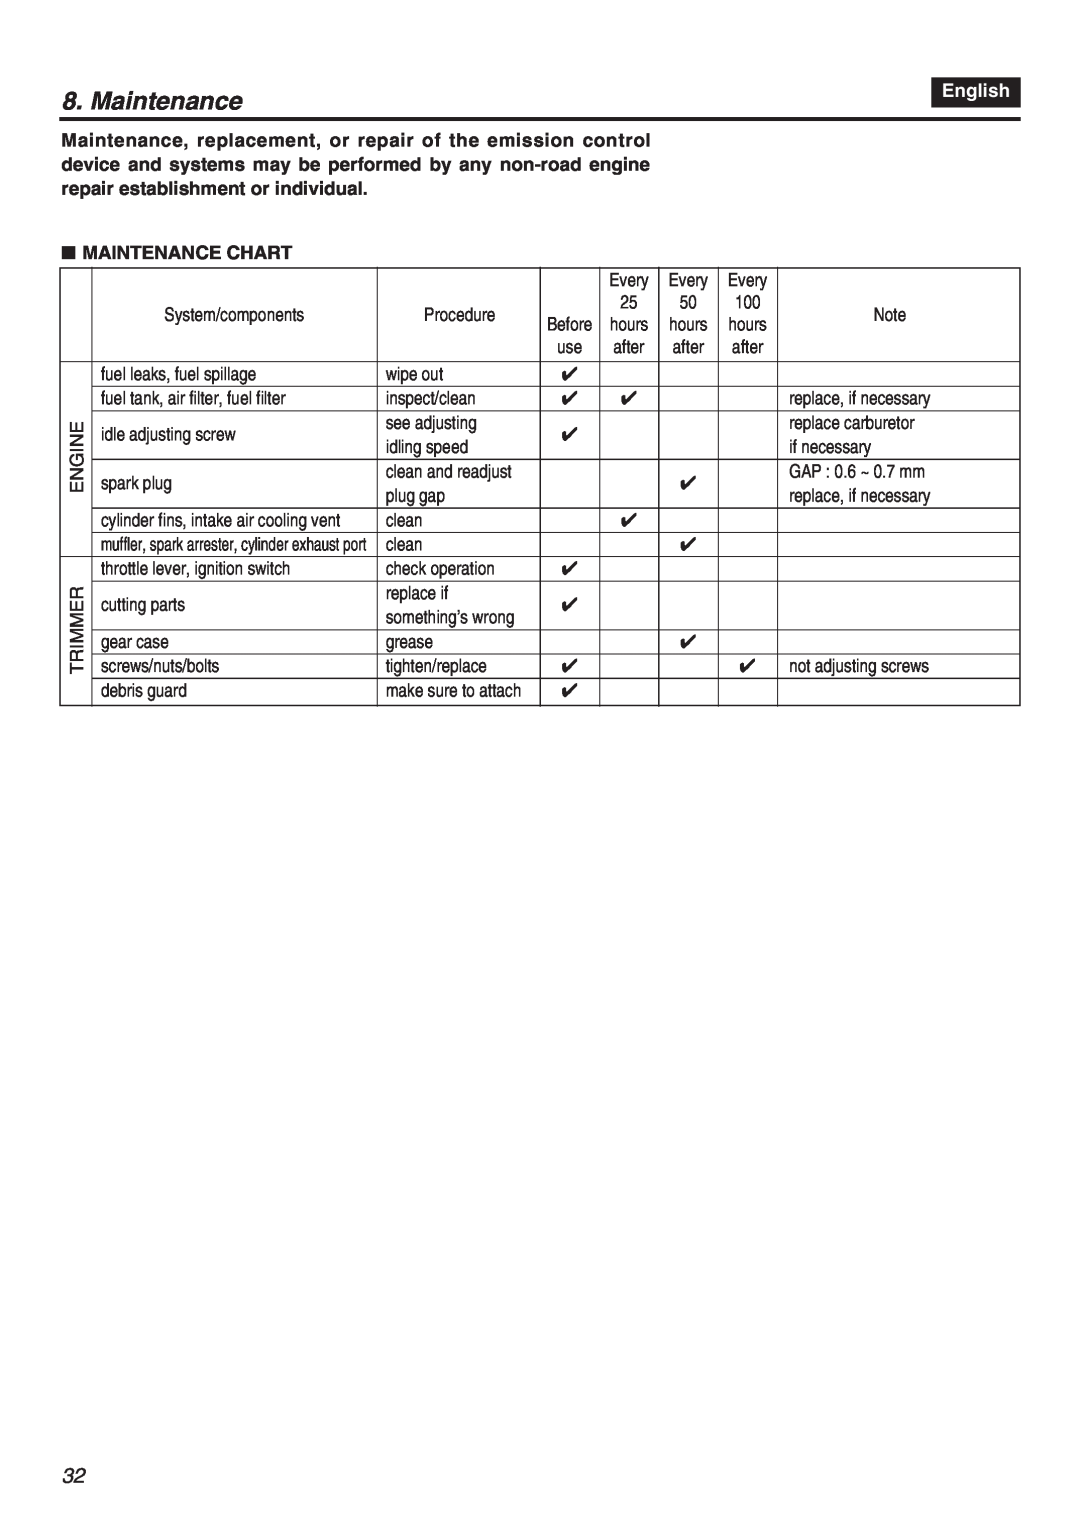 Zenoah HTZ2401-CA, CHTZ2401L manual English, Maintenance Chart 